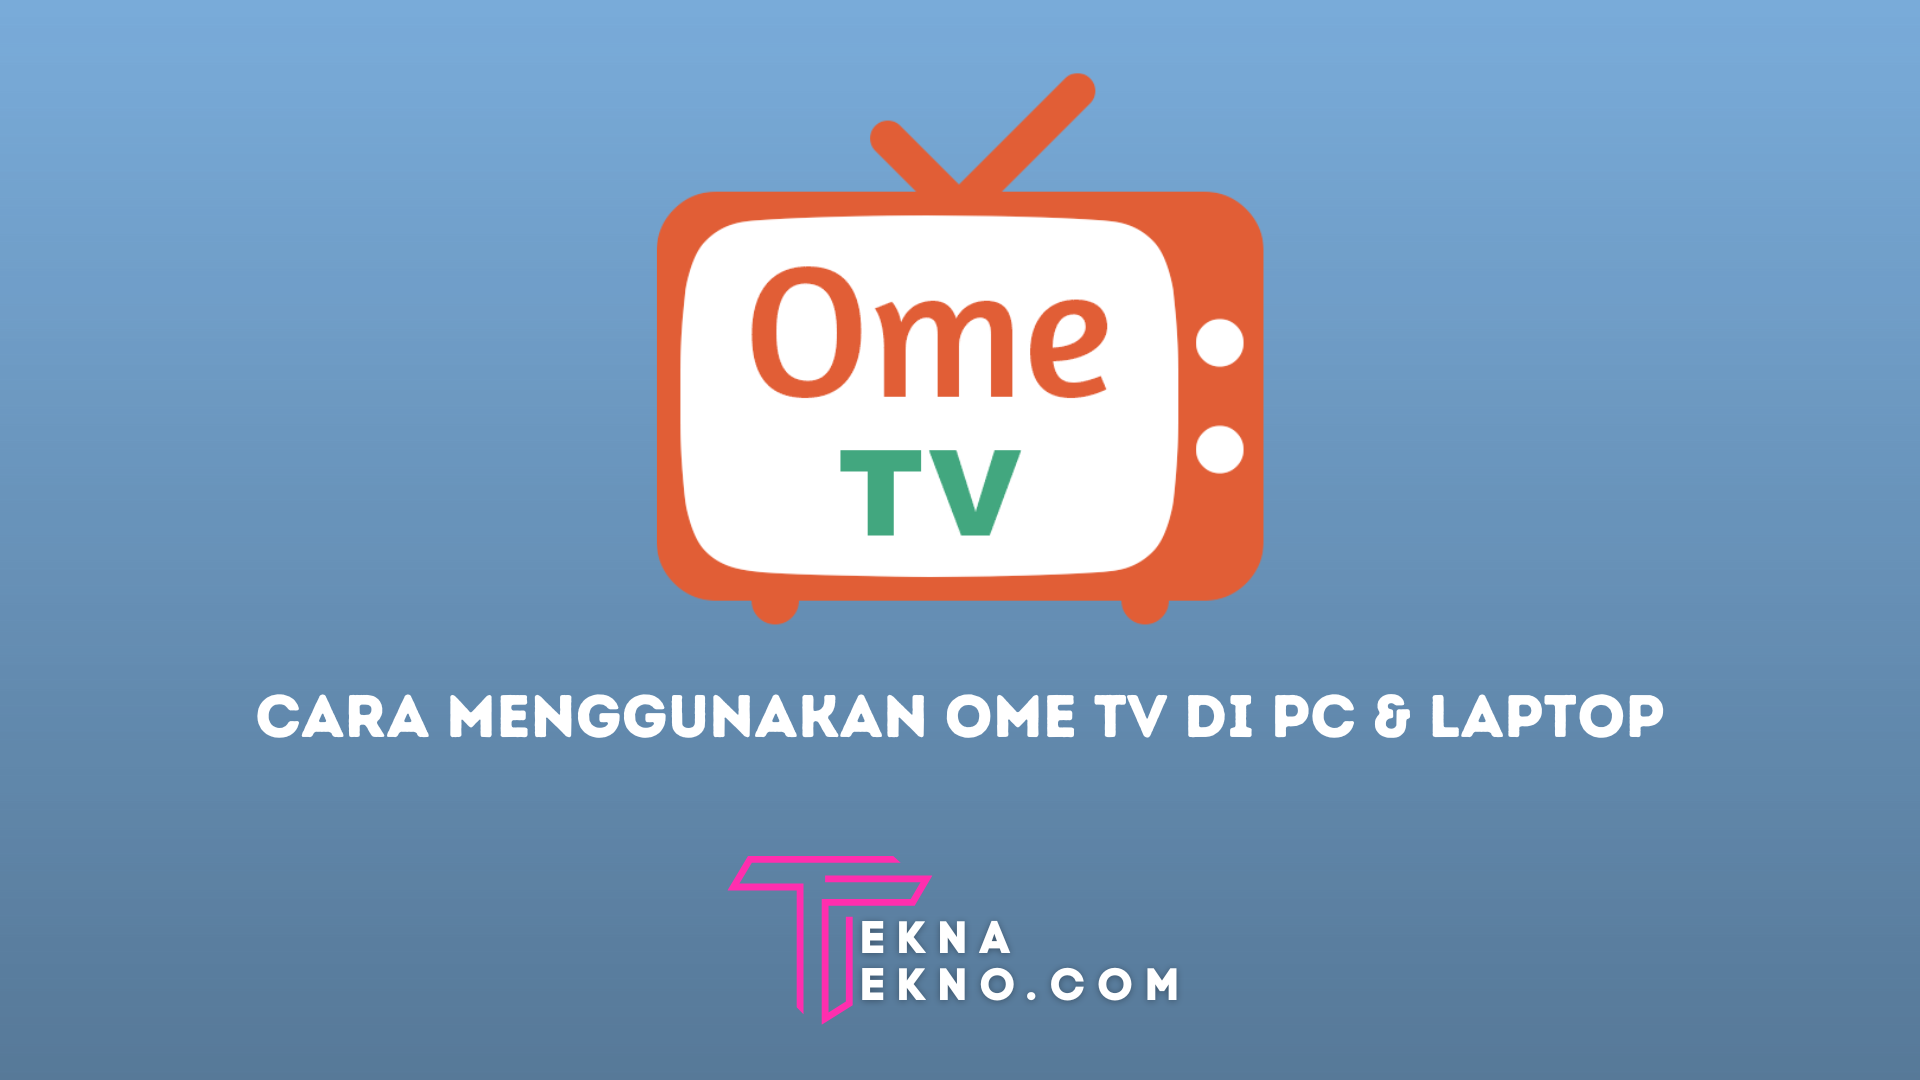 6 Cara Mudah Menggunakan Aplikasi Ome TV di PC atau Laptop dengan Aman